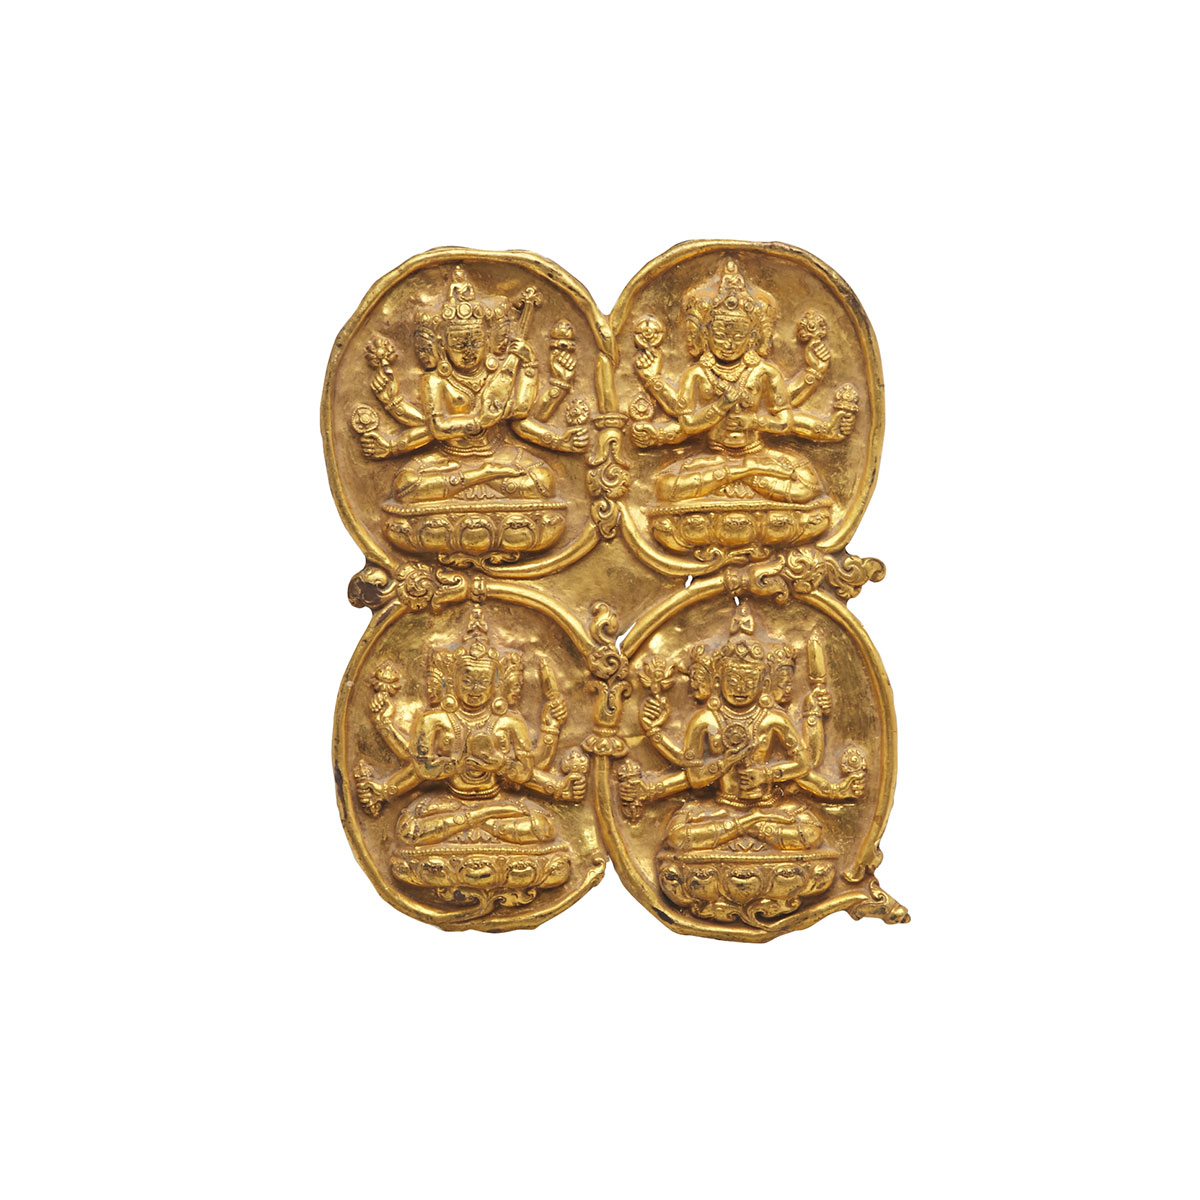 Gilt Bronze Repousse Plaque with Four BODDHISATTVAs,  Tibet, 17th/18th Century